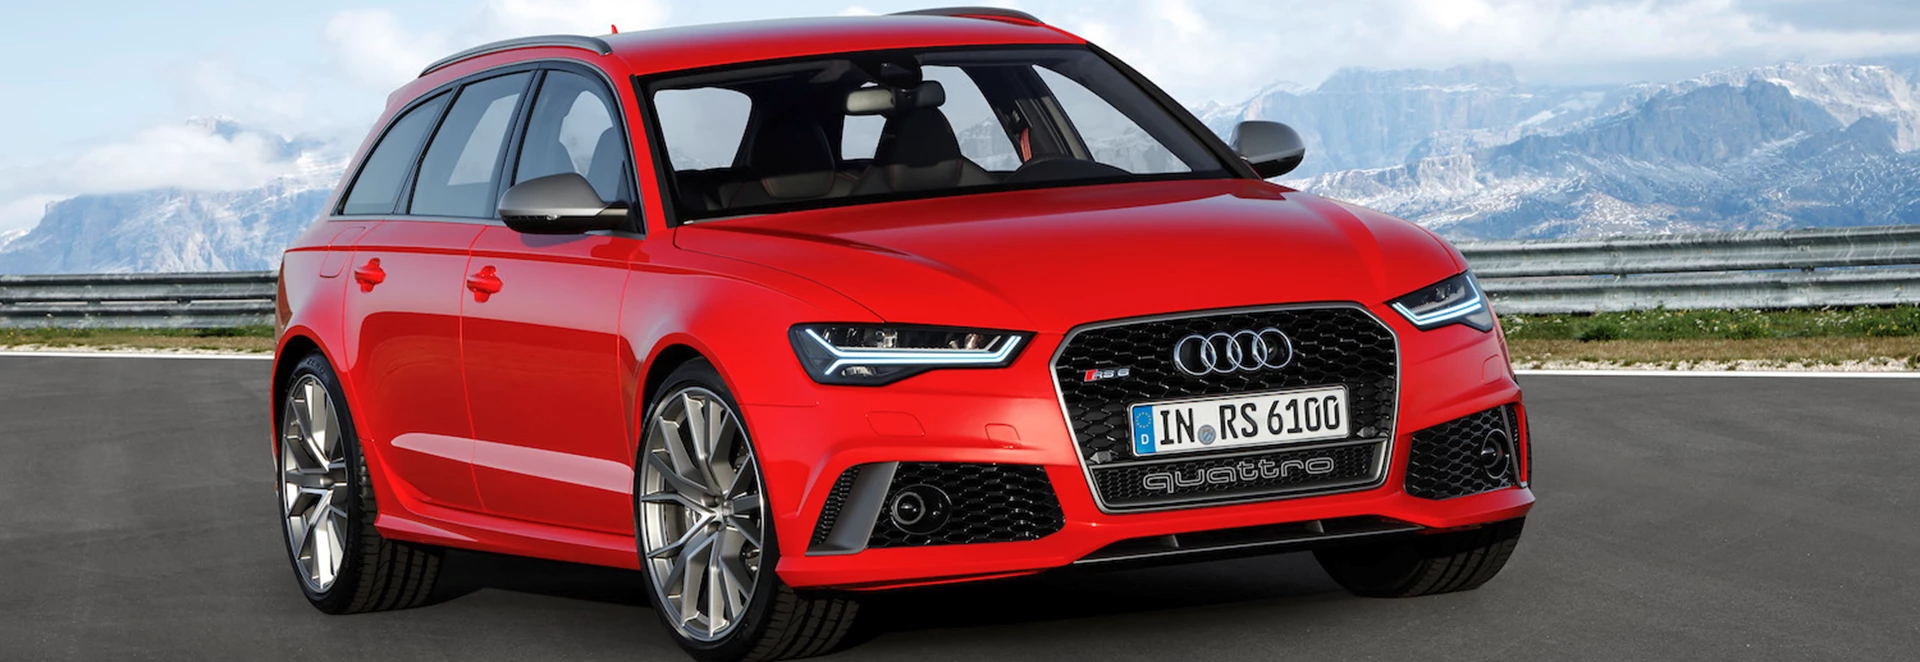 Audi RS 6 Avant Performance 2019 review